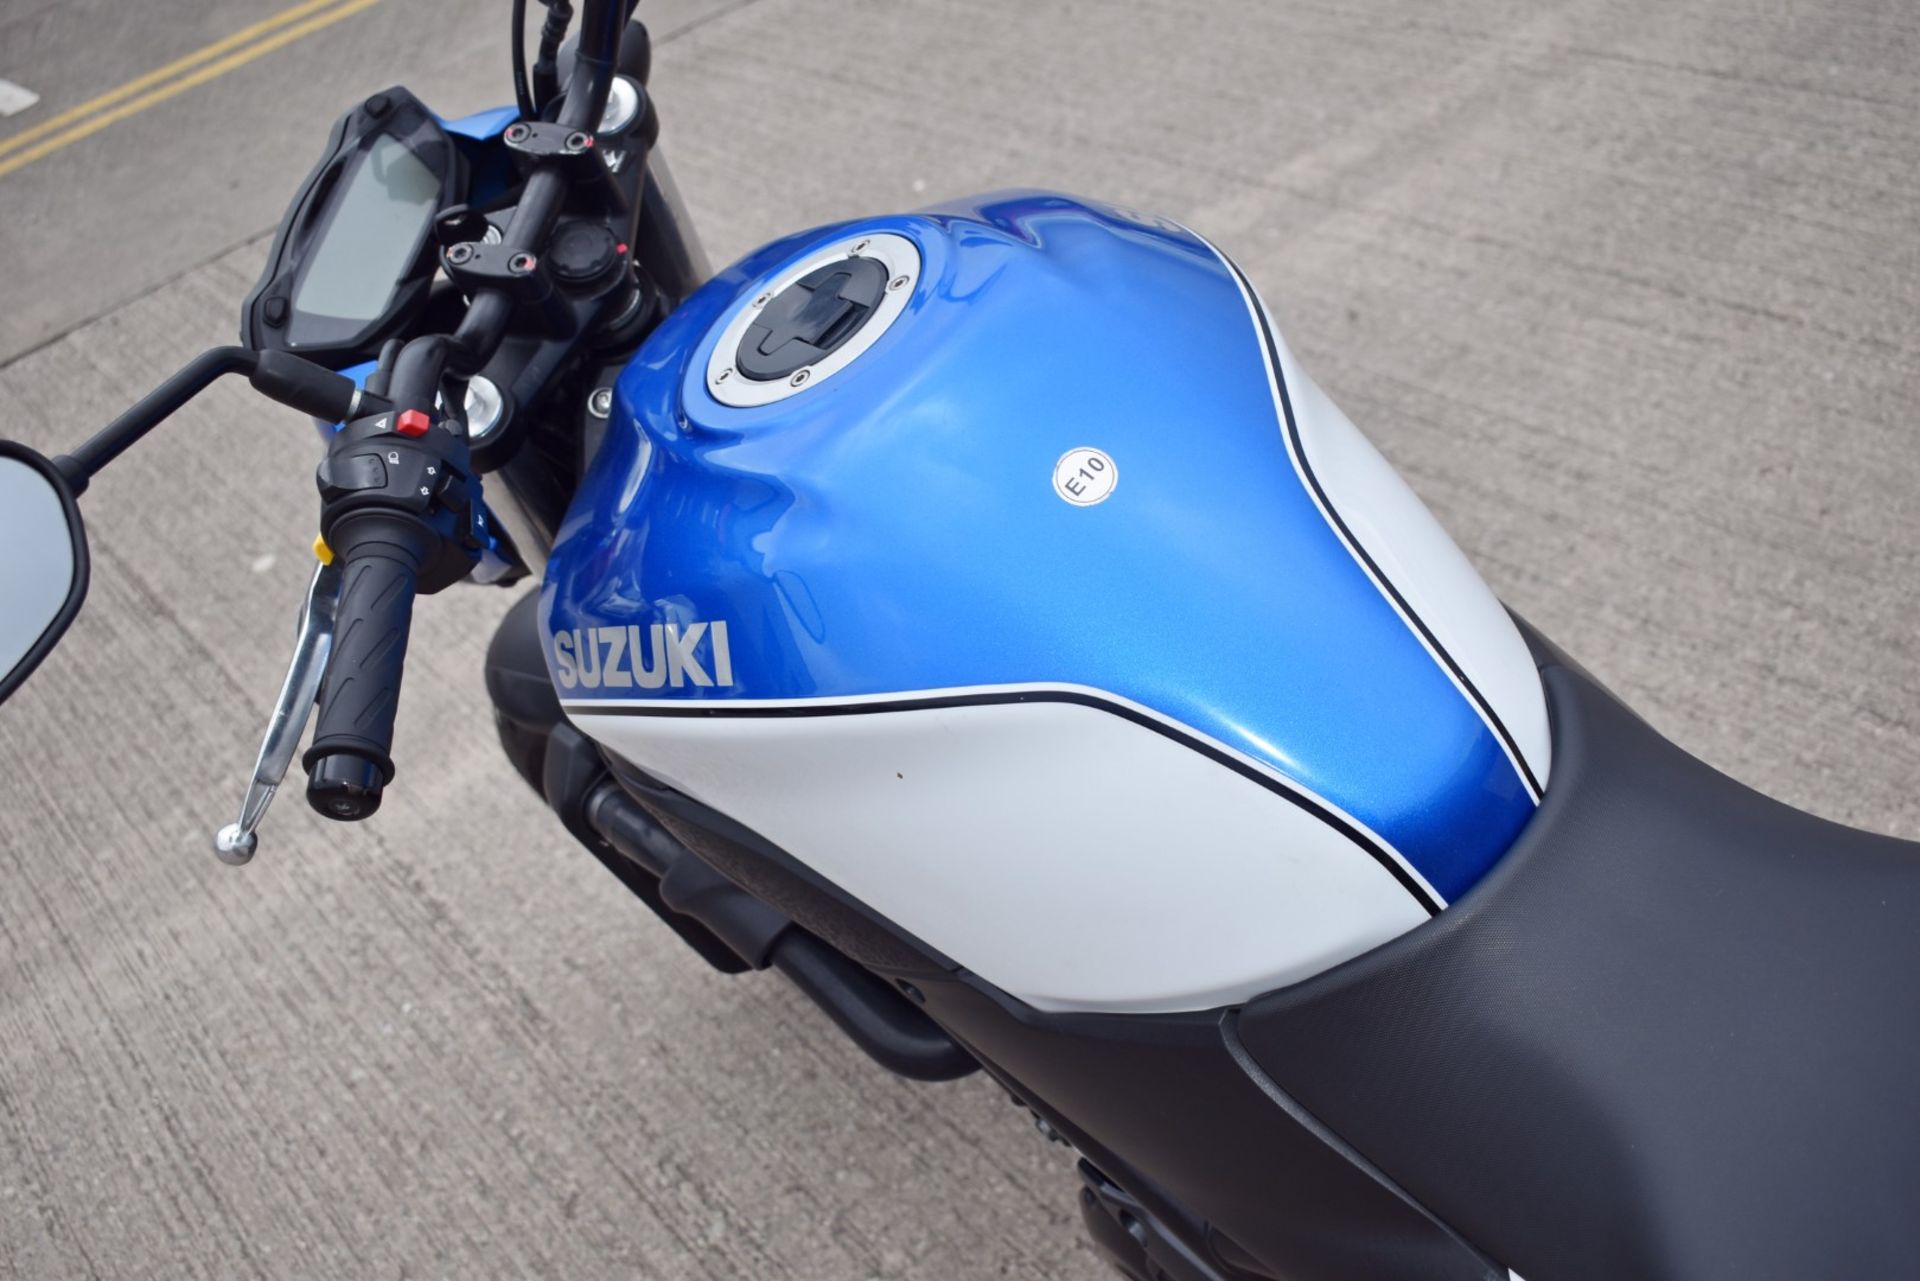 2018 Suzuki SV650 Motorcycle - BA18 UFV - Mileage: 18,188 - Image 18 of 25